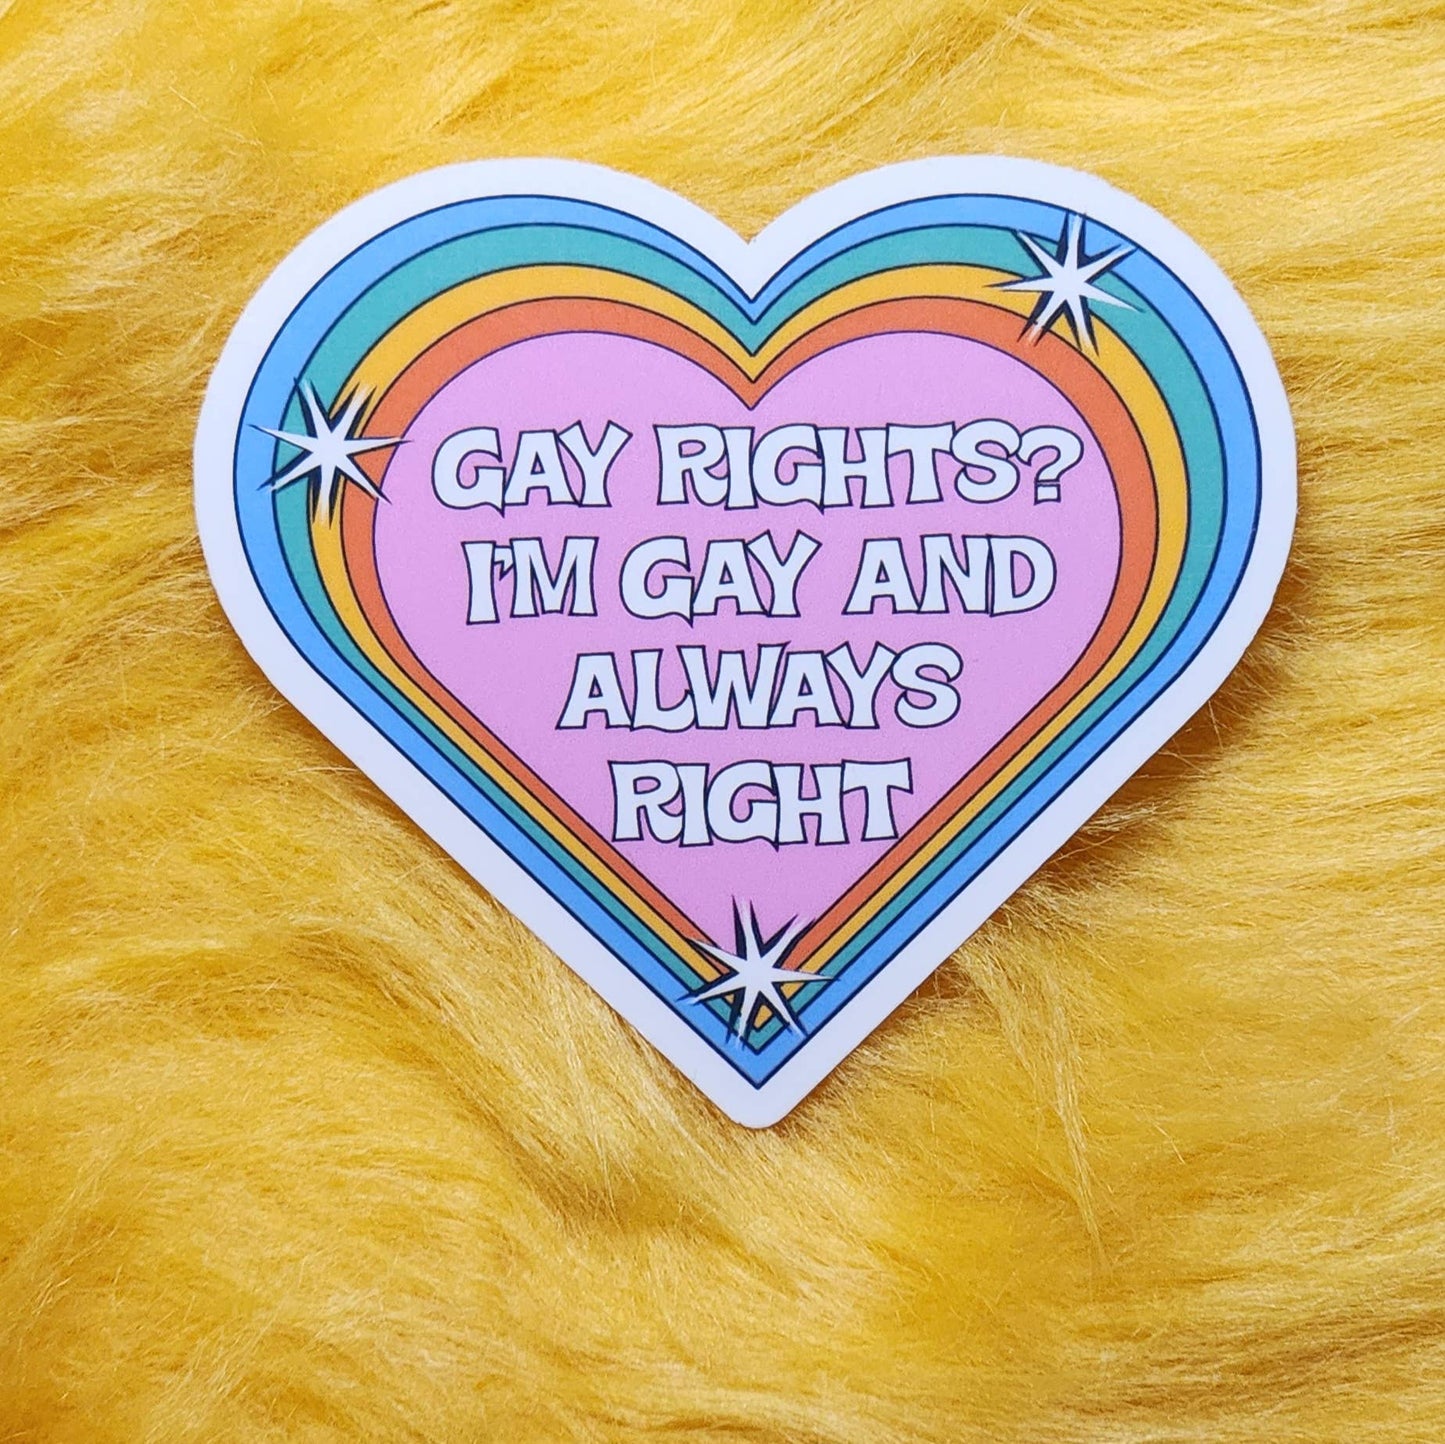 Funny gay rights sticker: Glitter